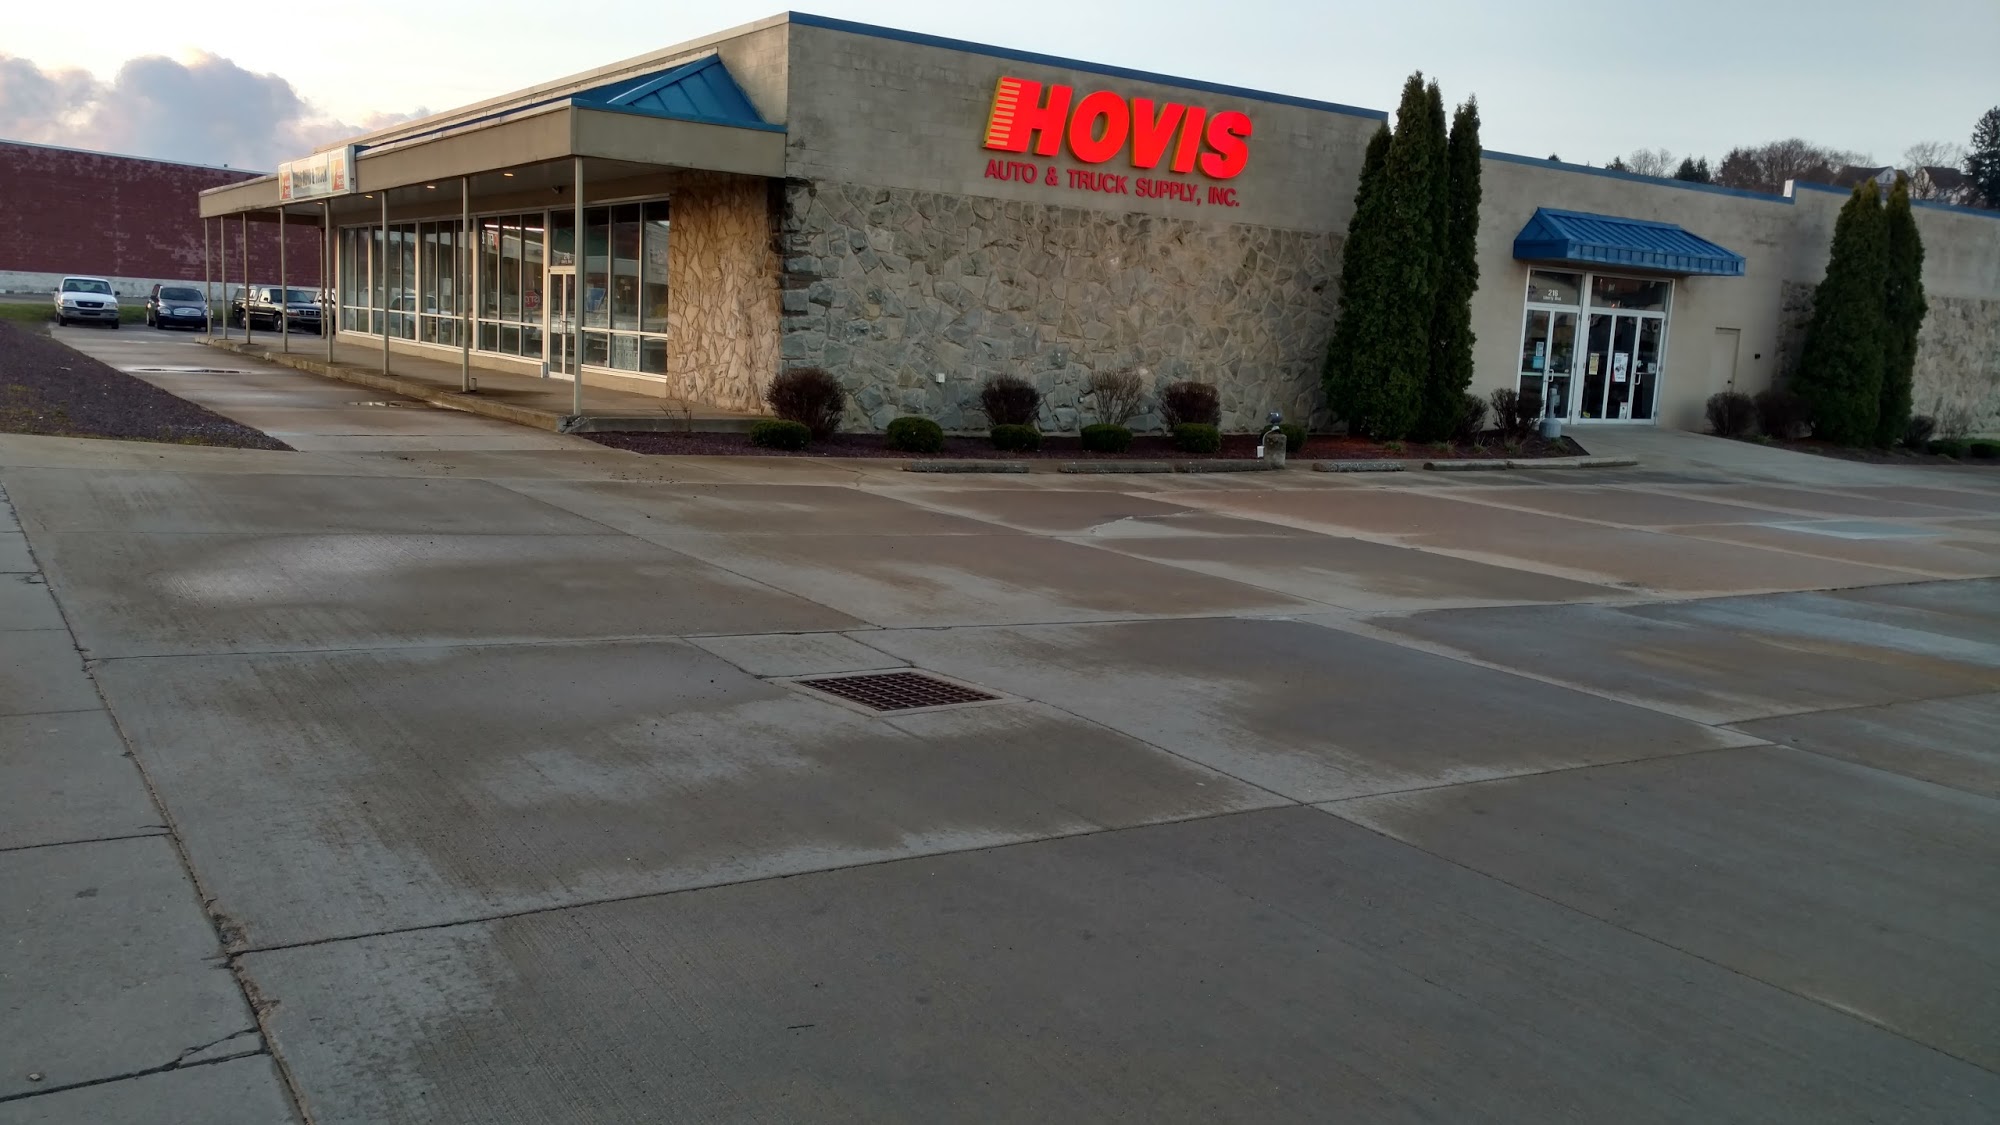 Hovis Auto & Truck Supply Inc.